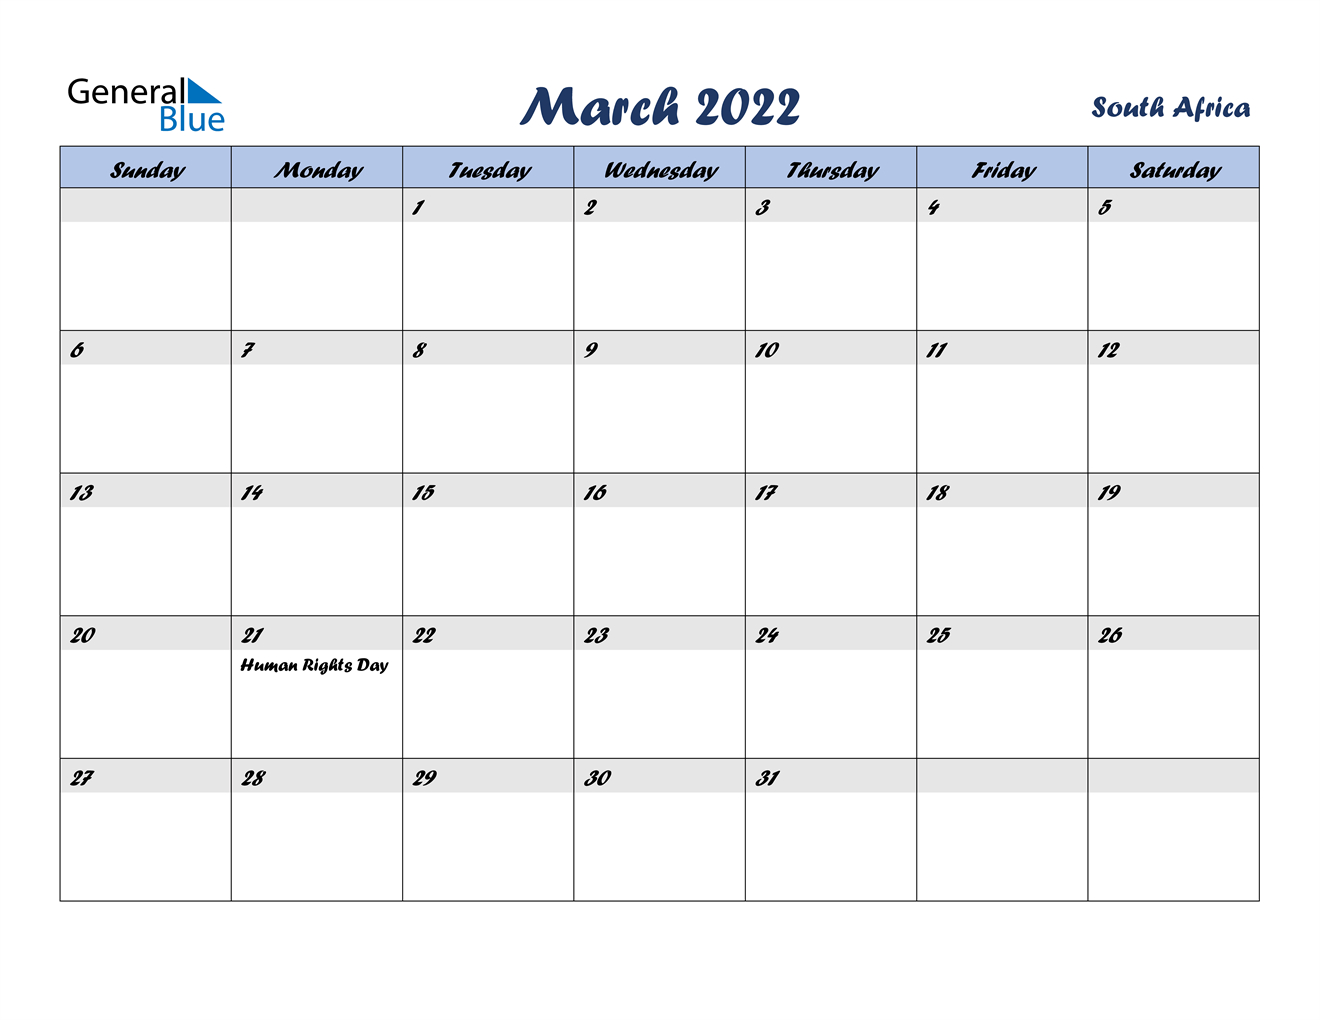 March 2022 Calendar - South Africa-Holiday Calendar 2022 South Africa